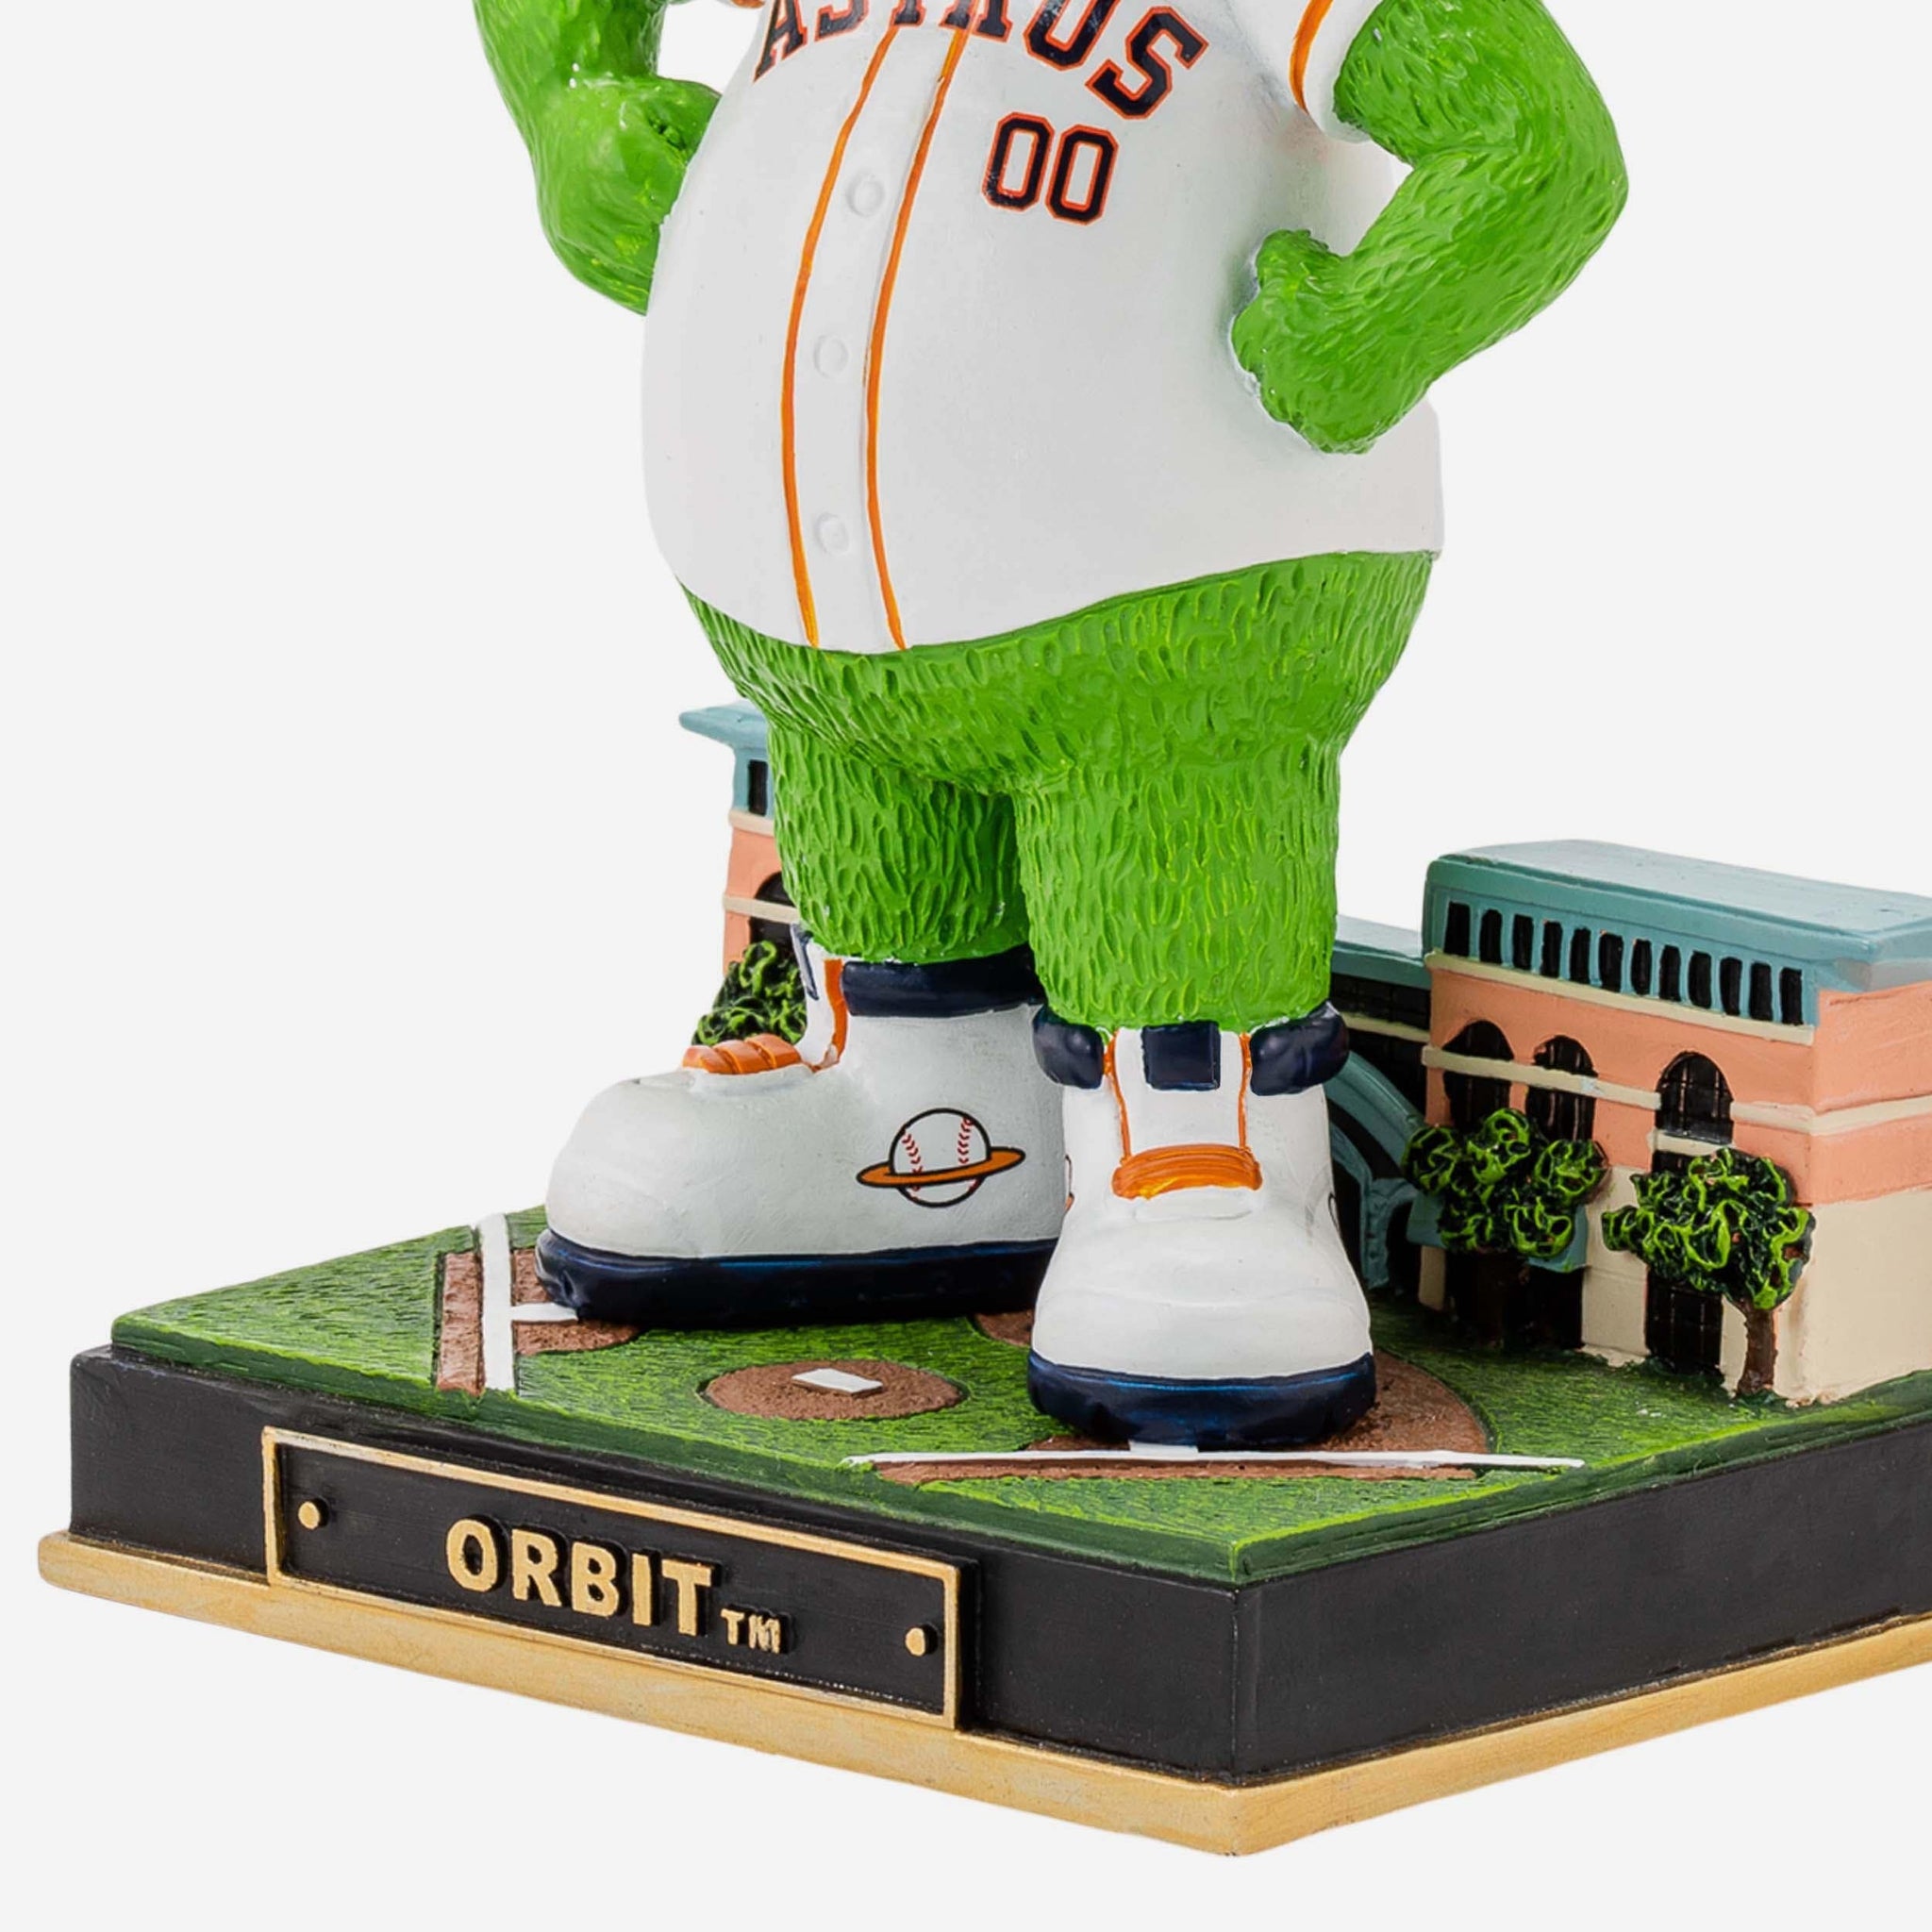 Orbit Houston Astros Mascot Bighead Bobblehead FOCO